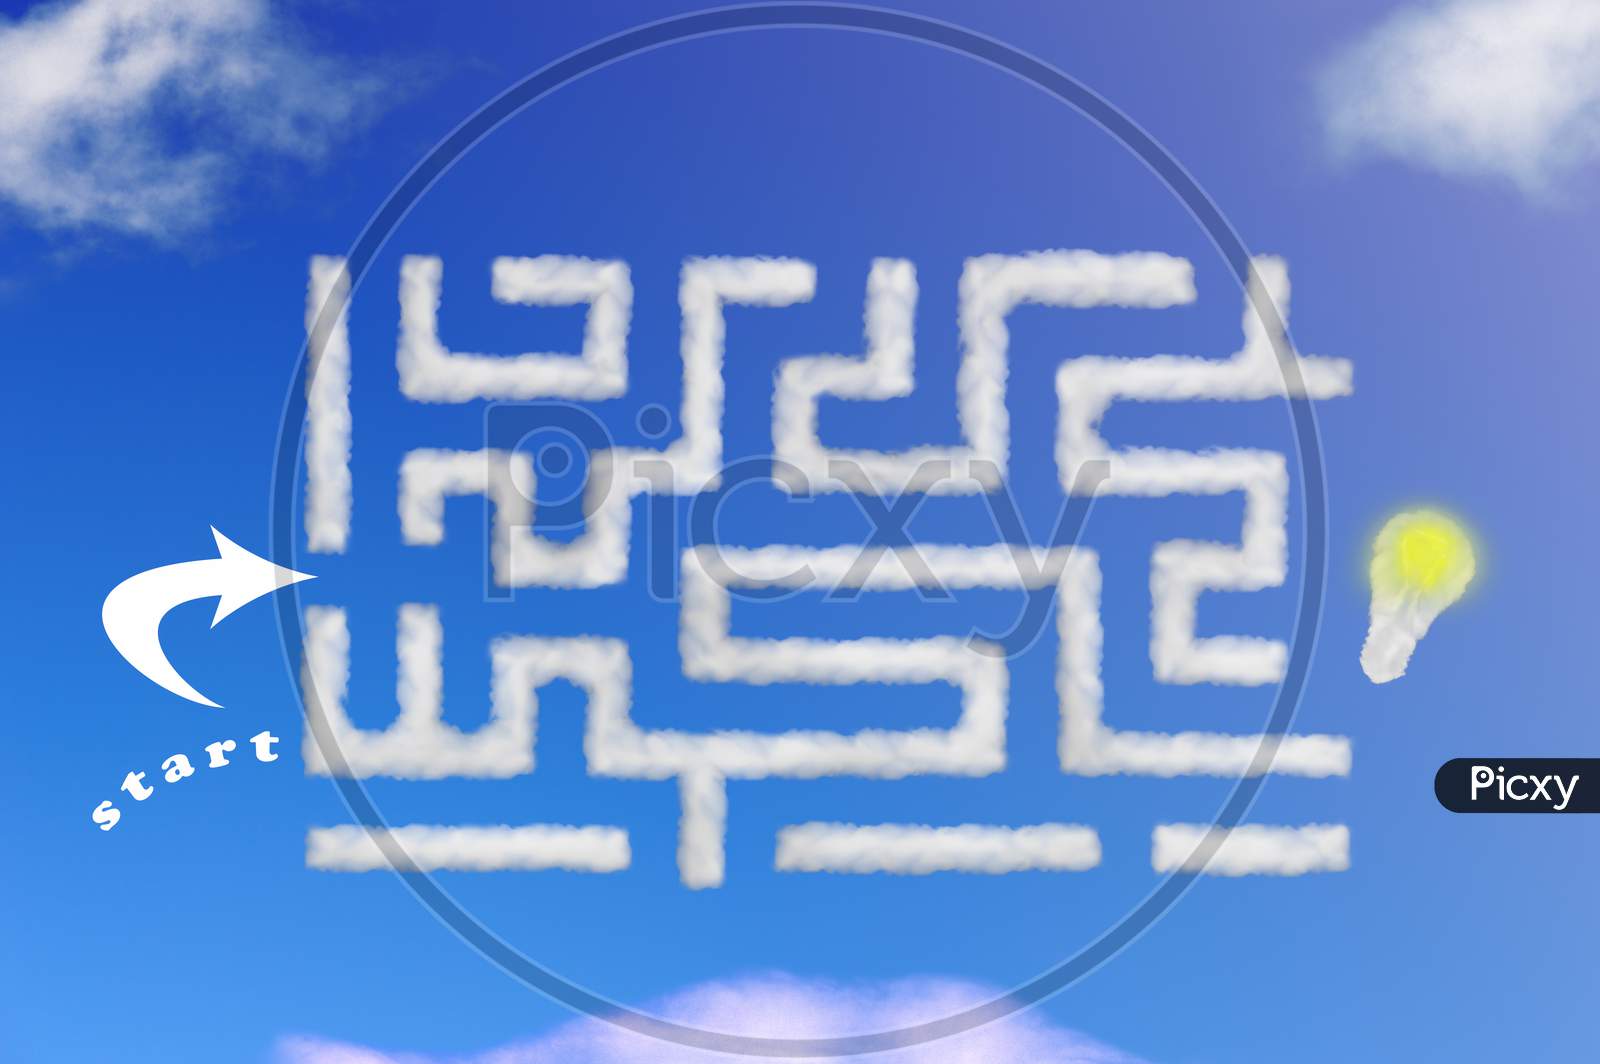 Cloud Shape Of Labyrinth Or Maze